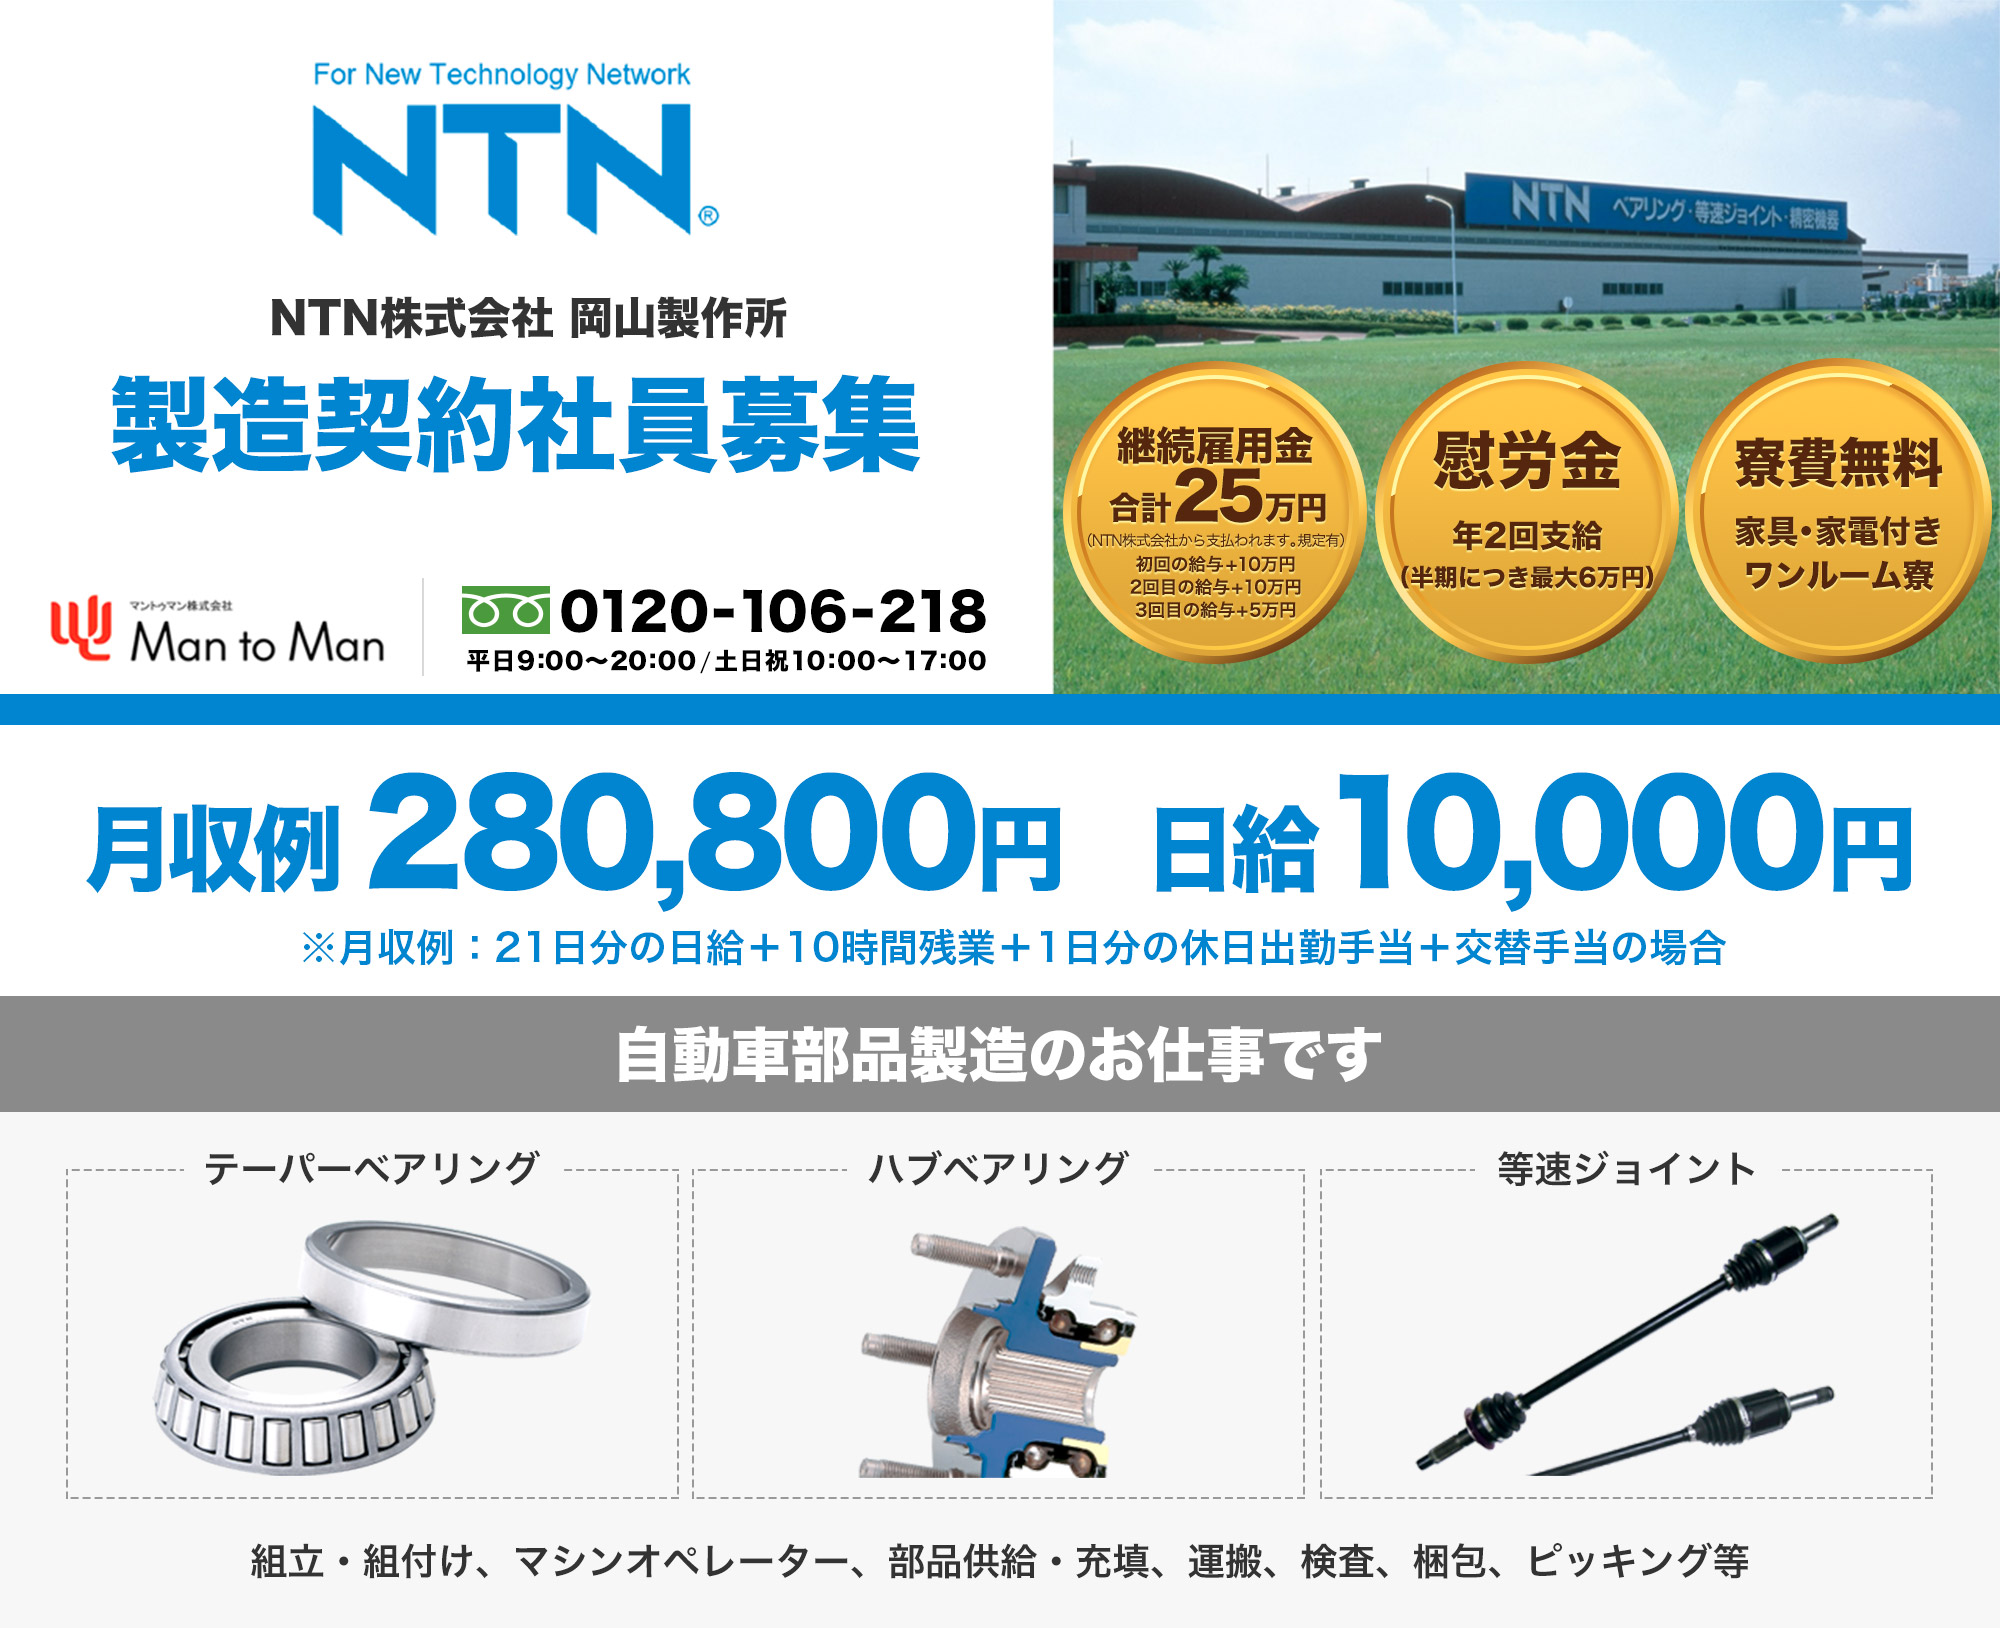 NTN株式会社 岡山製作所 製造契約社員募集中です！軸受および等速ジョイントの製造に関するお仕事になります。安定企業が安心サポート！